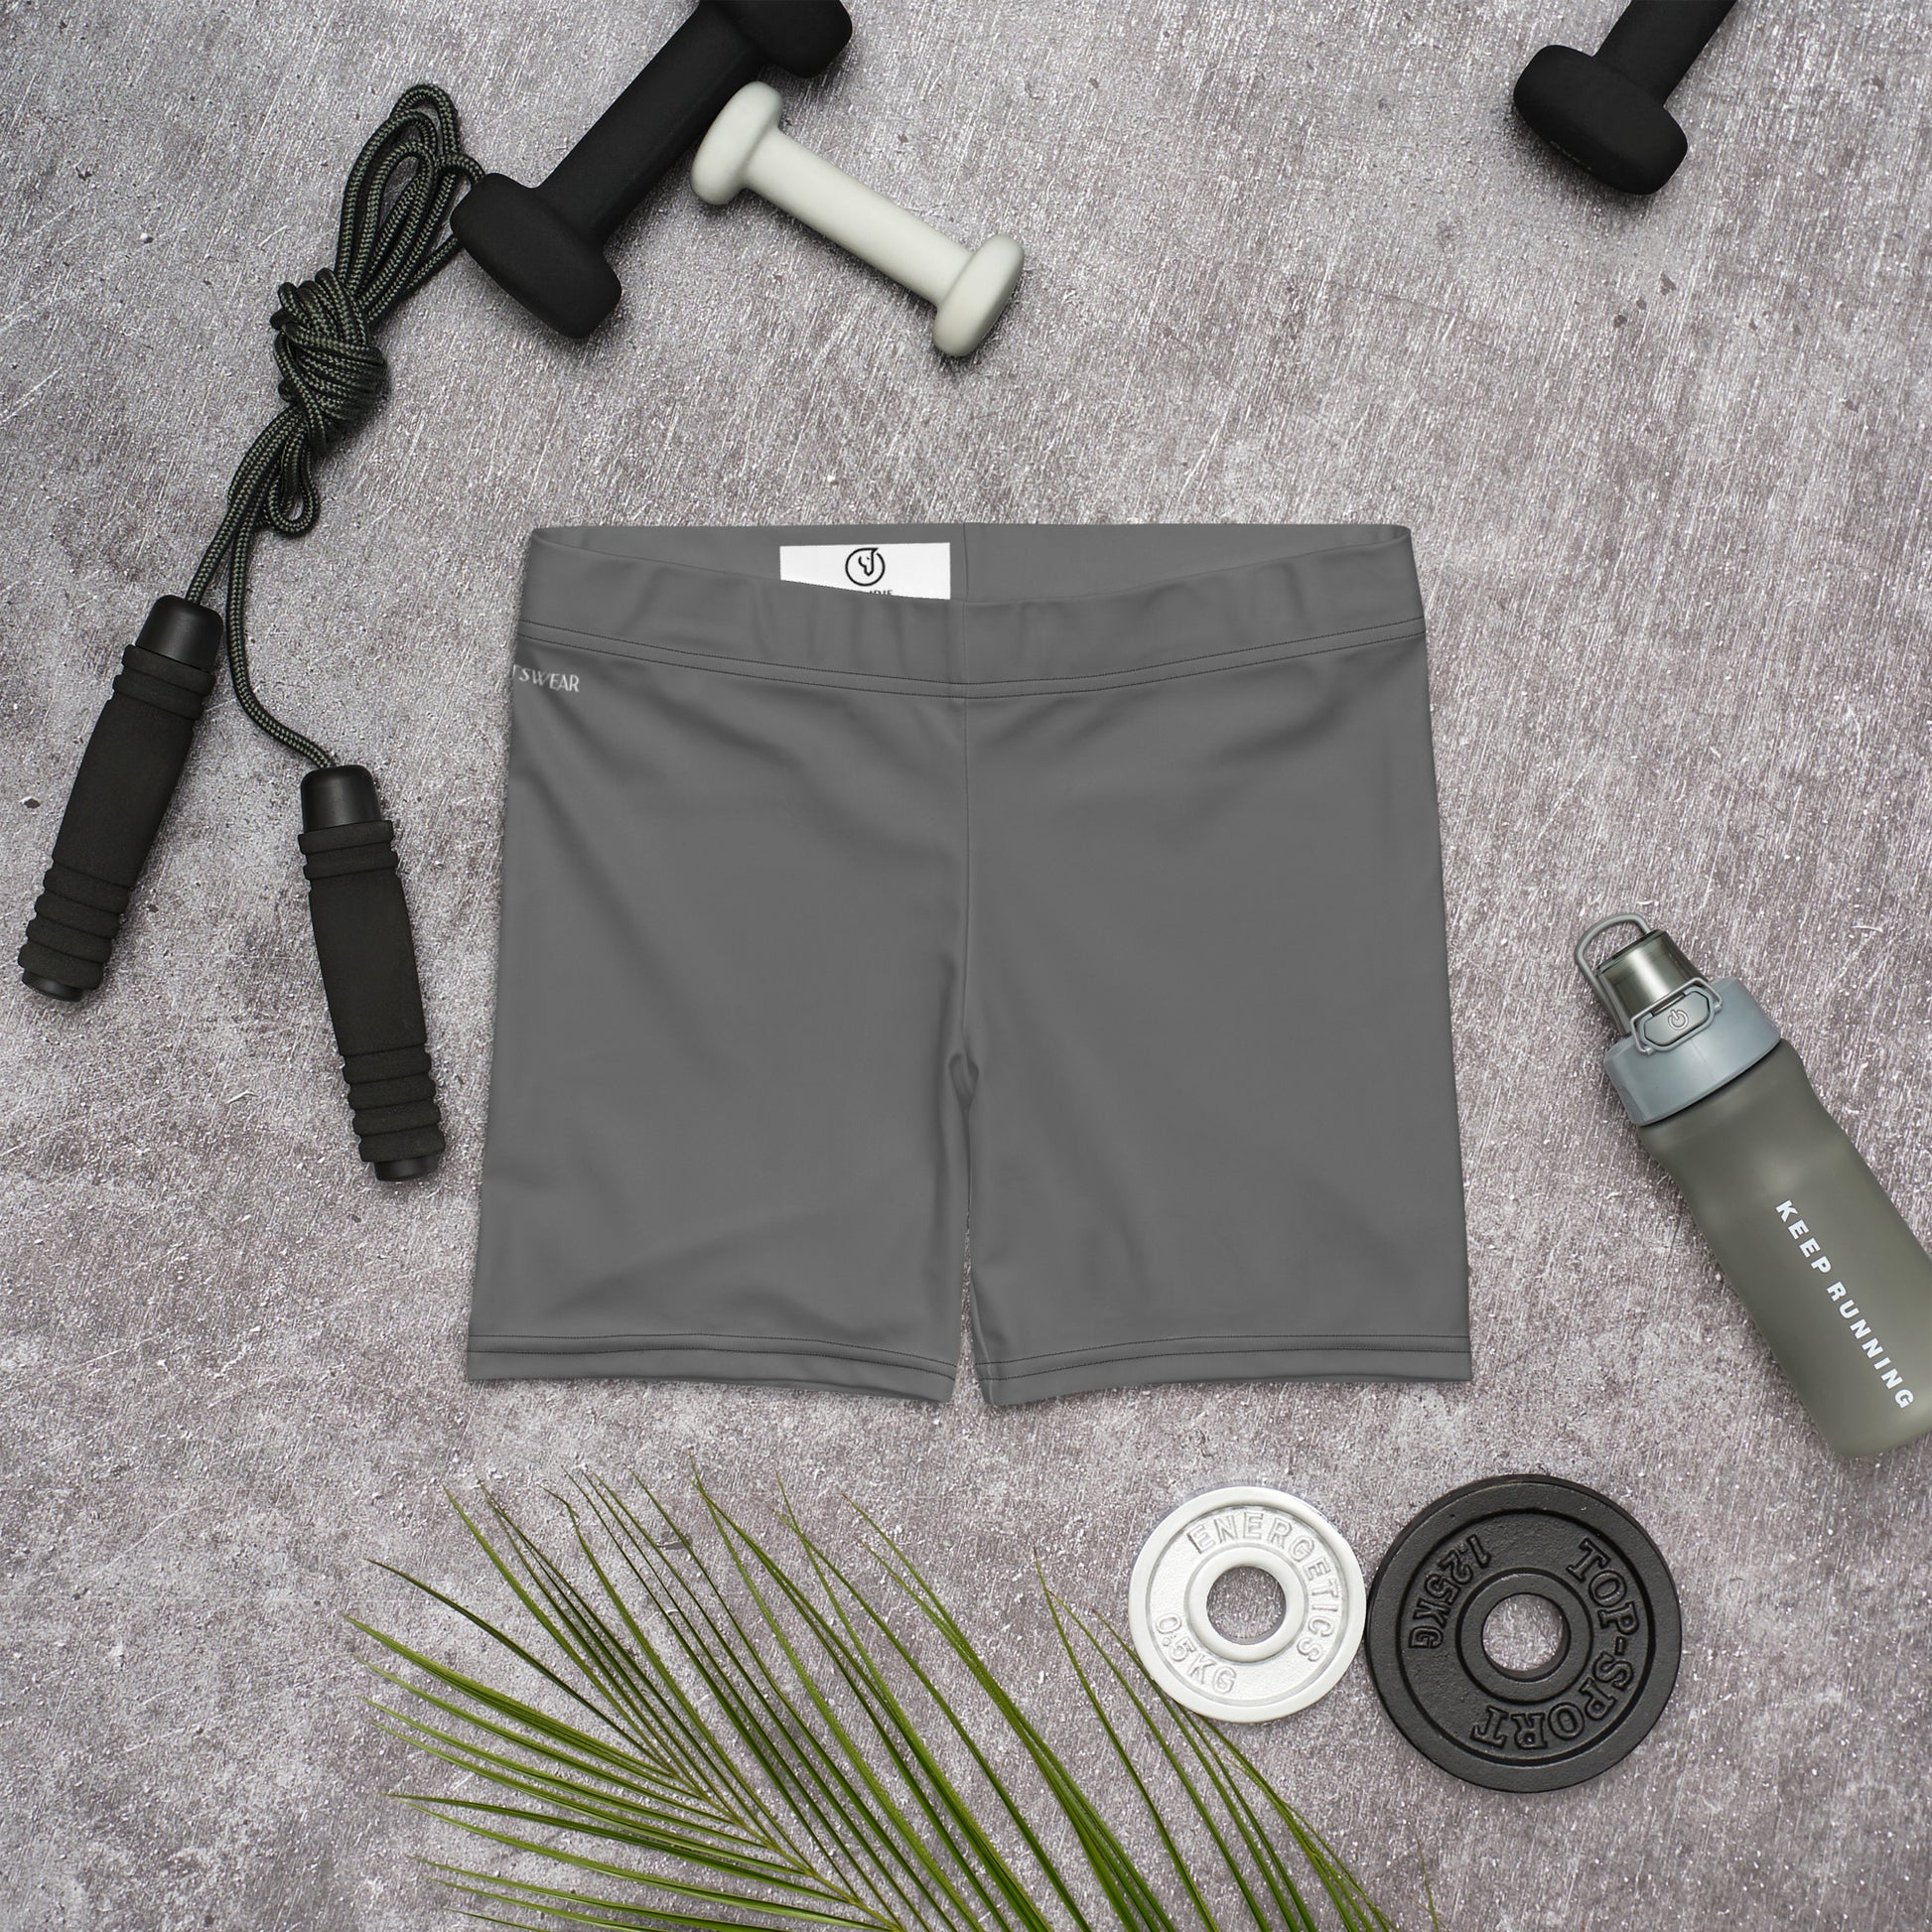 Humble Sportswear, women's Color Match grey active, casual wear bike shorts 